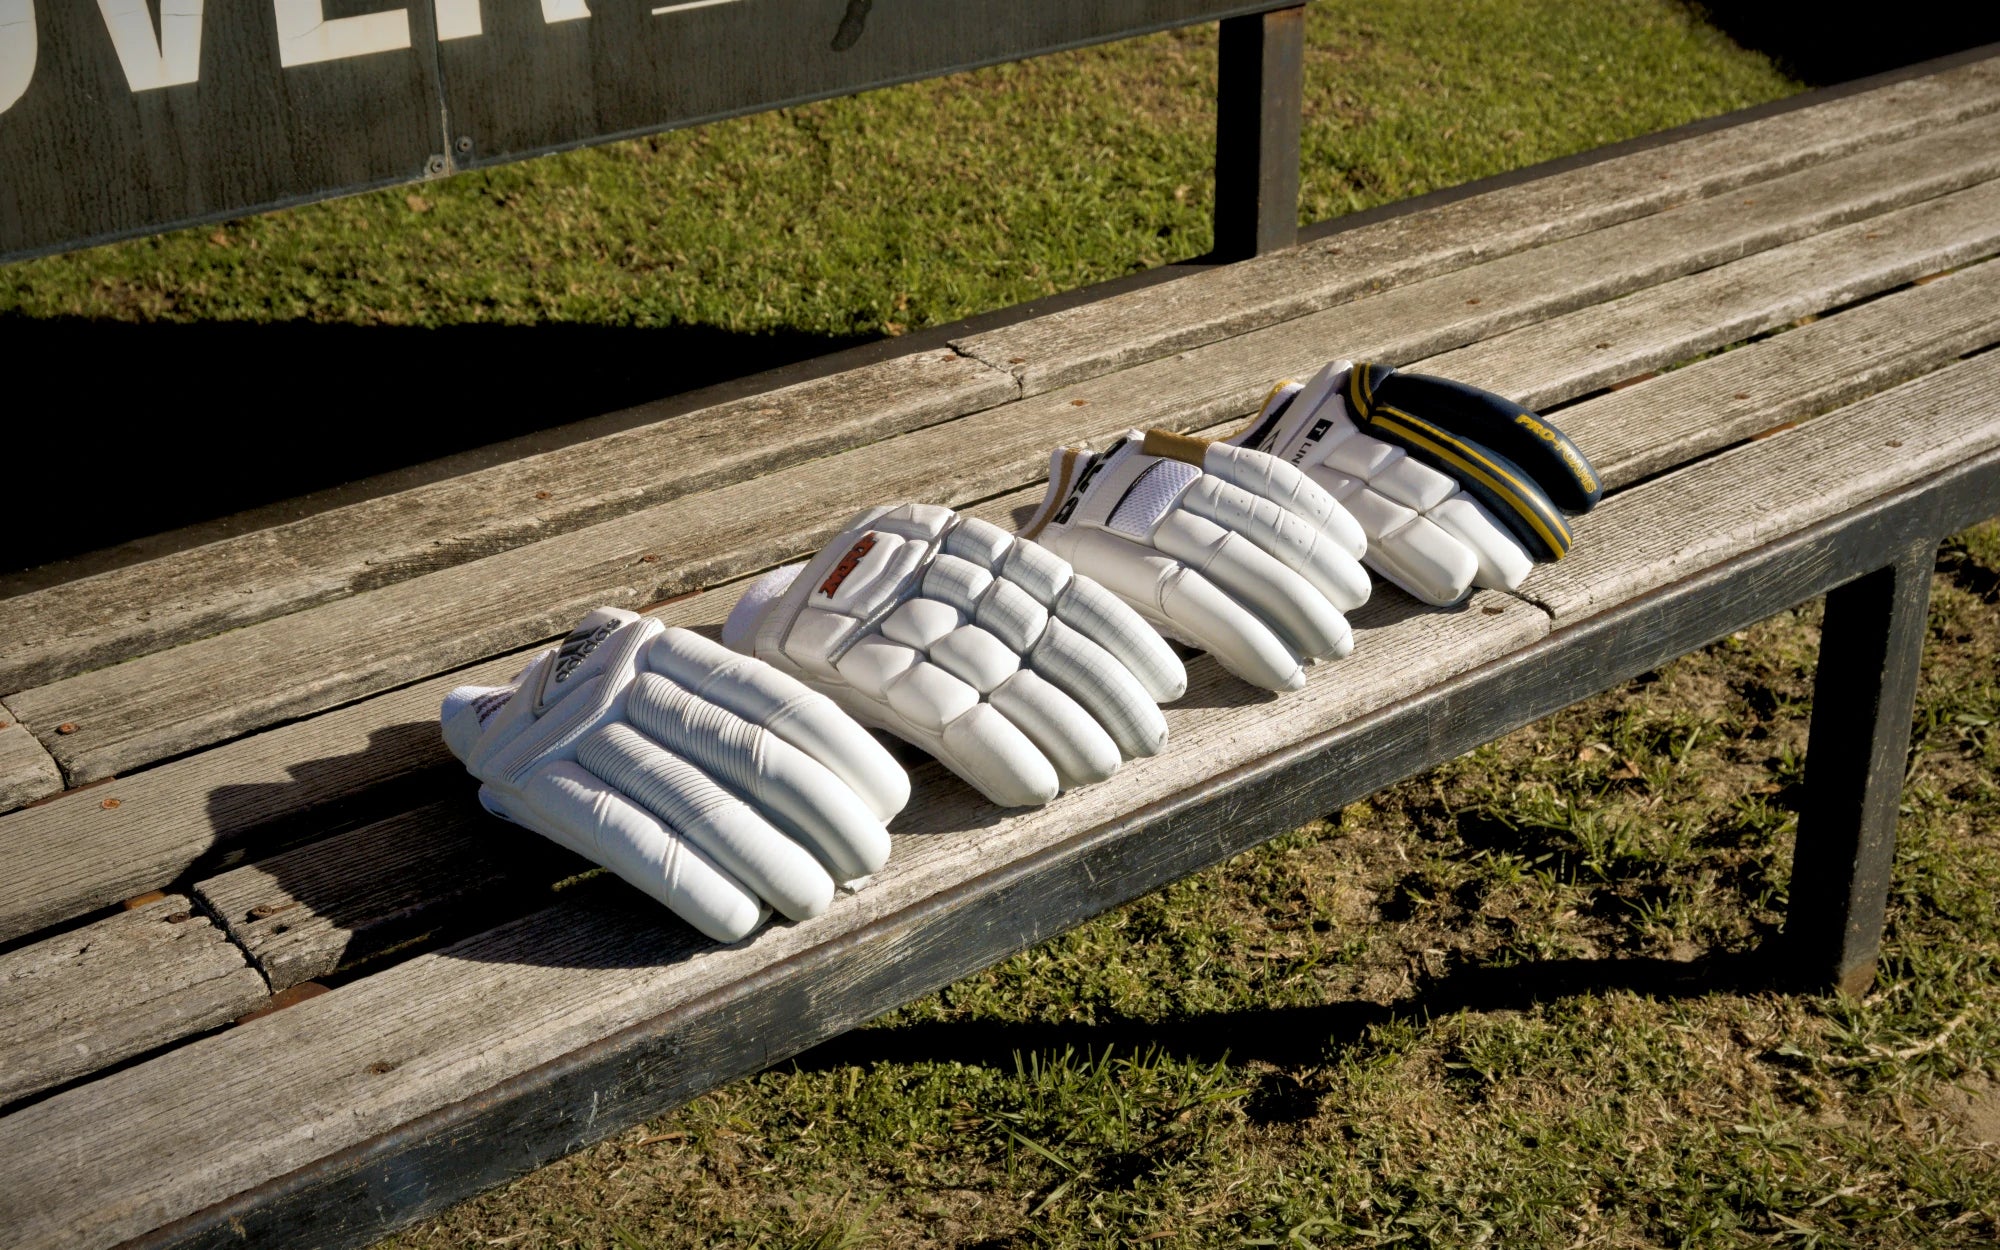 Adult Cricket Batting Gloves